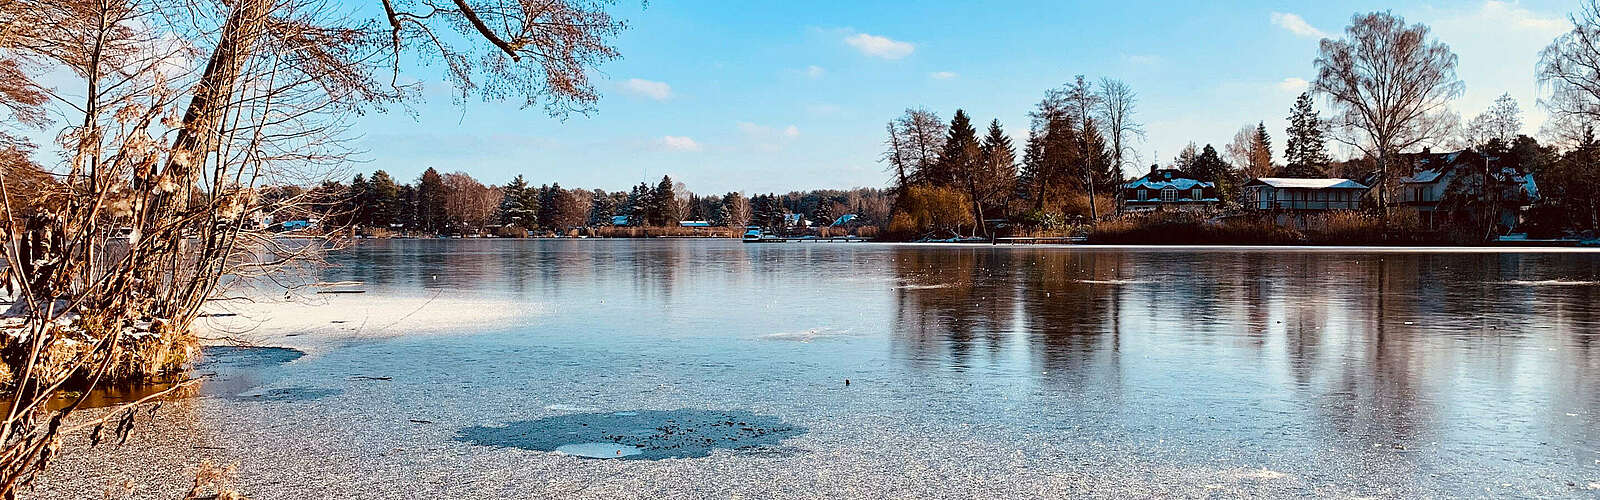 Zeuthener See im Winter,
        
    

        Foto: Tourismusverband Dahme-Seenland e.V./Juliane Frank